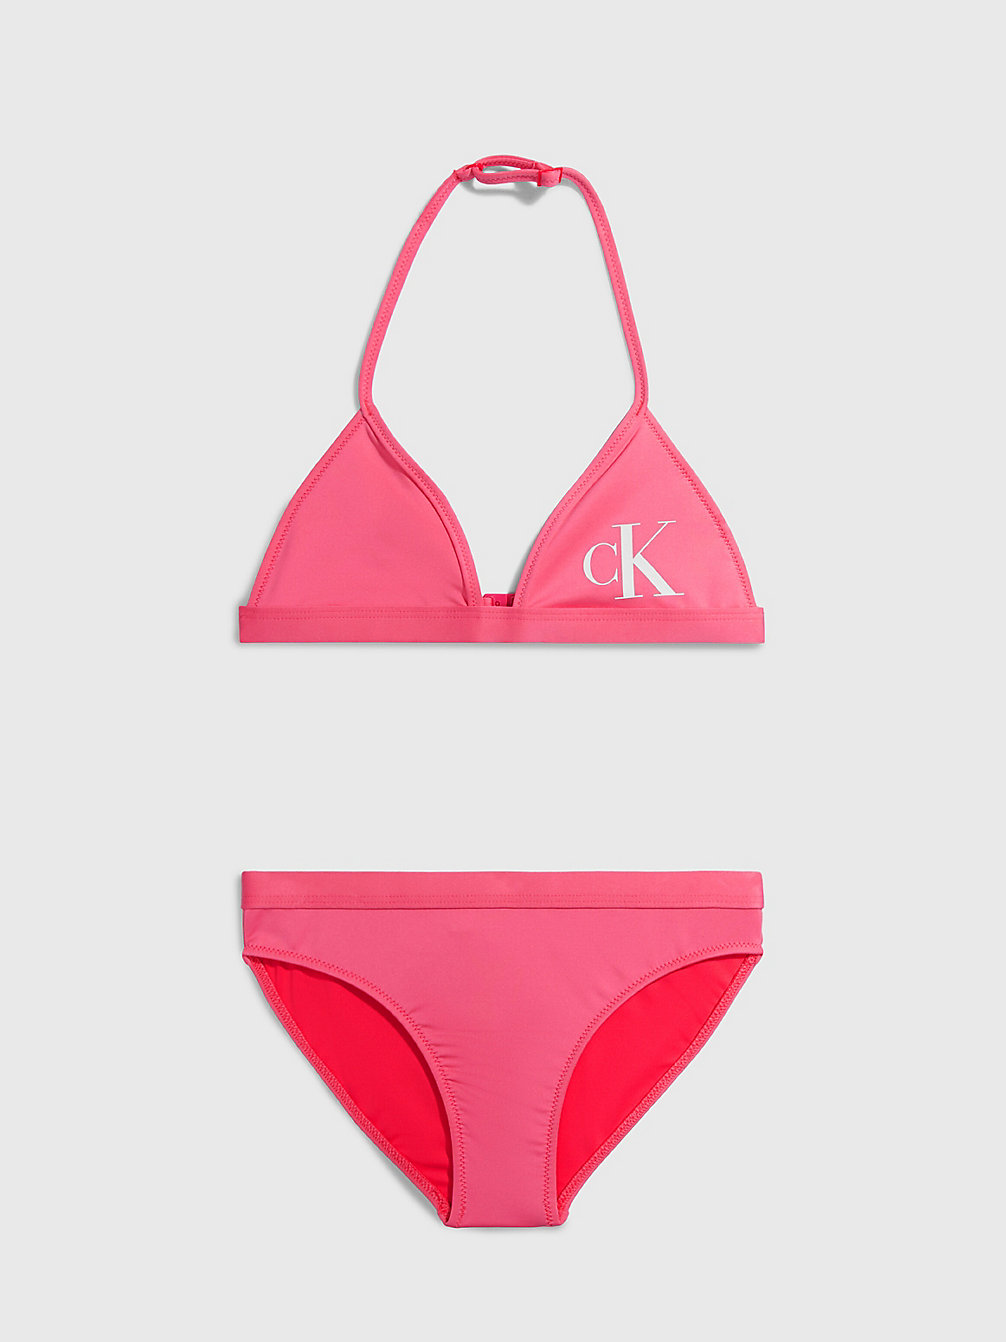 PINK FLASH Ensemble Bikini Triangle Pour Fille - CK Monogram undefined girls Calvin Klein